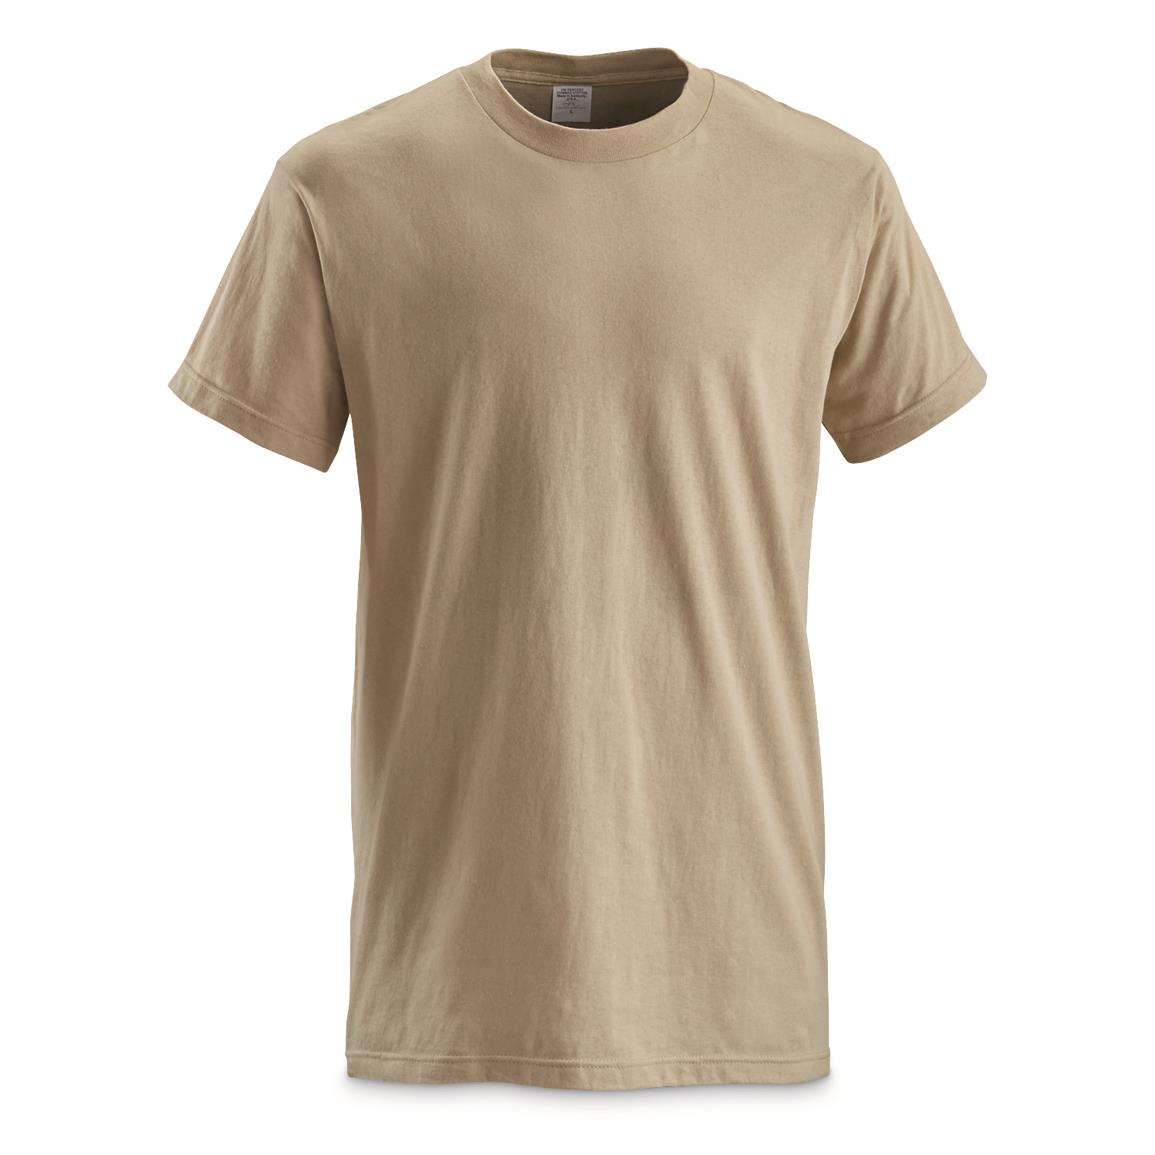 U.S. Military Surplus T-Shirts, 12 Pack, New